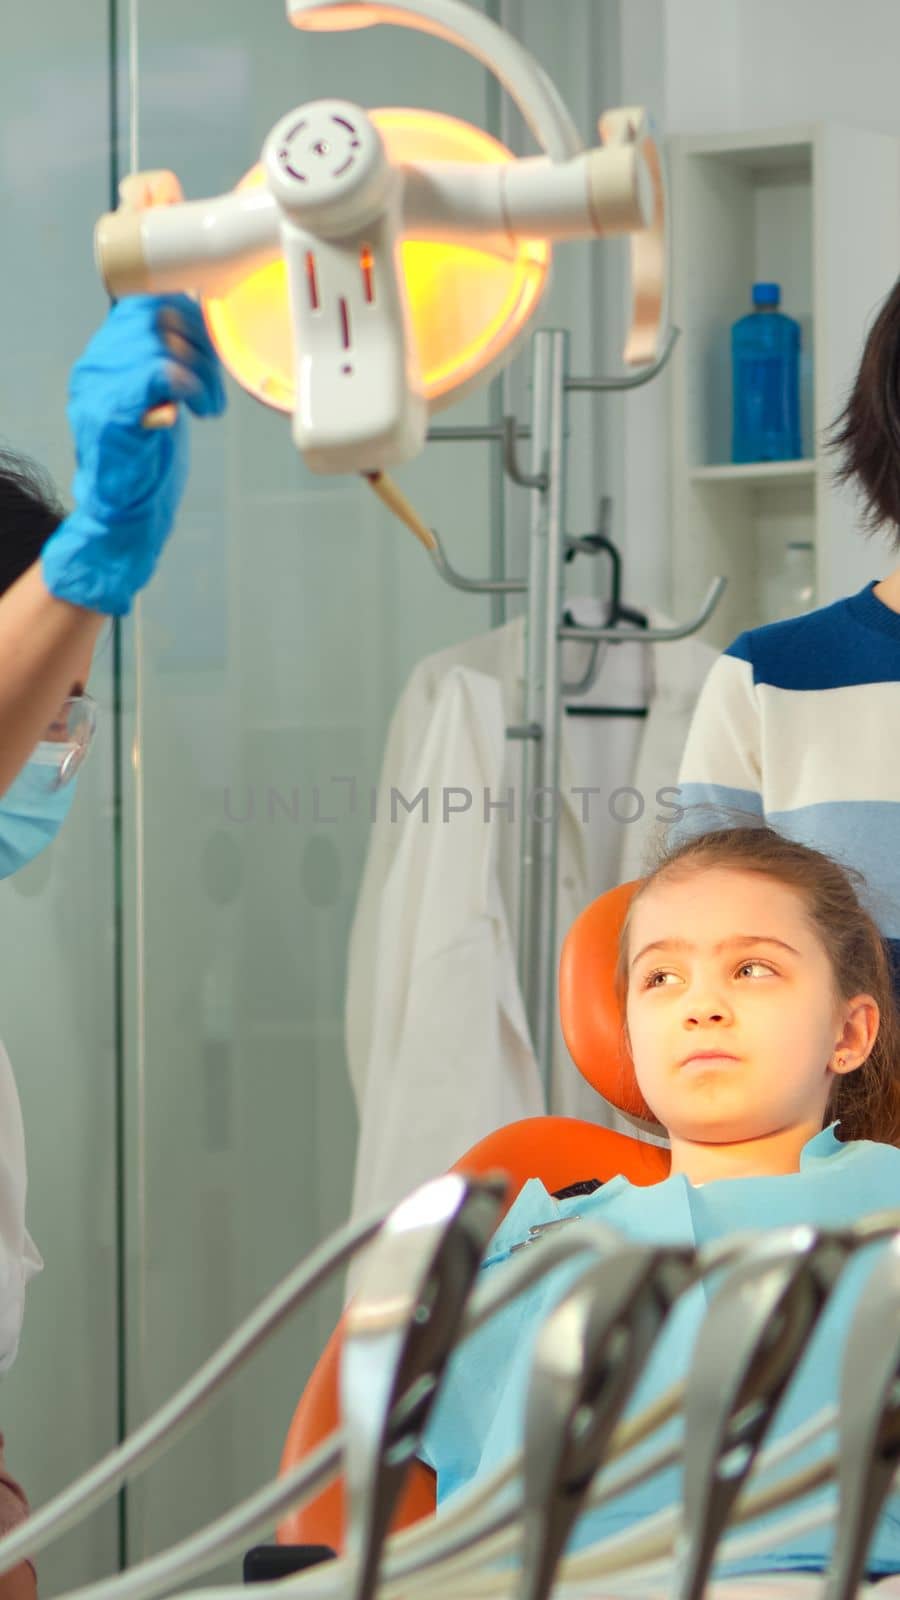 Orthodontist lighting the lamp until examining kid by DCStudio